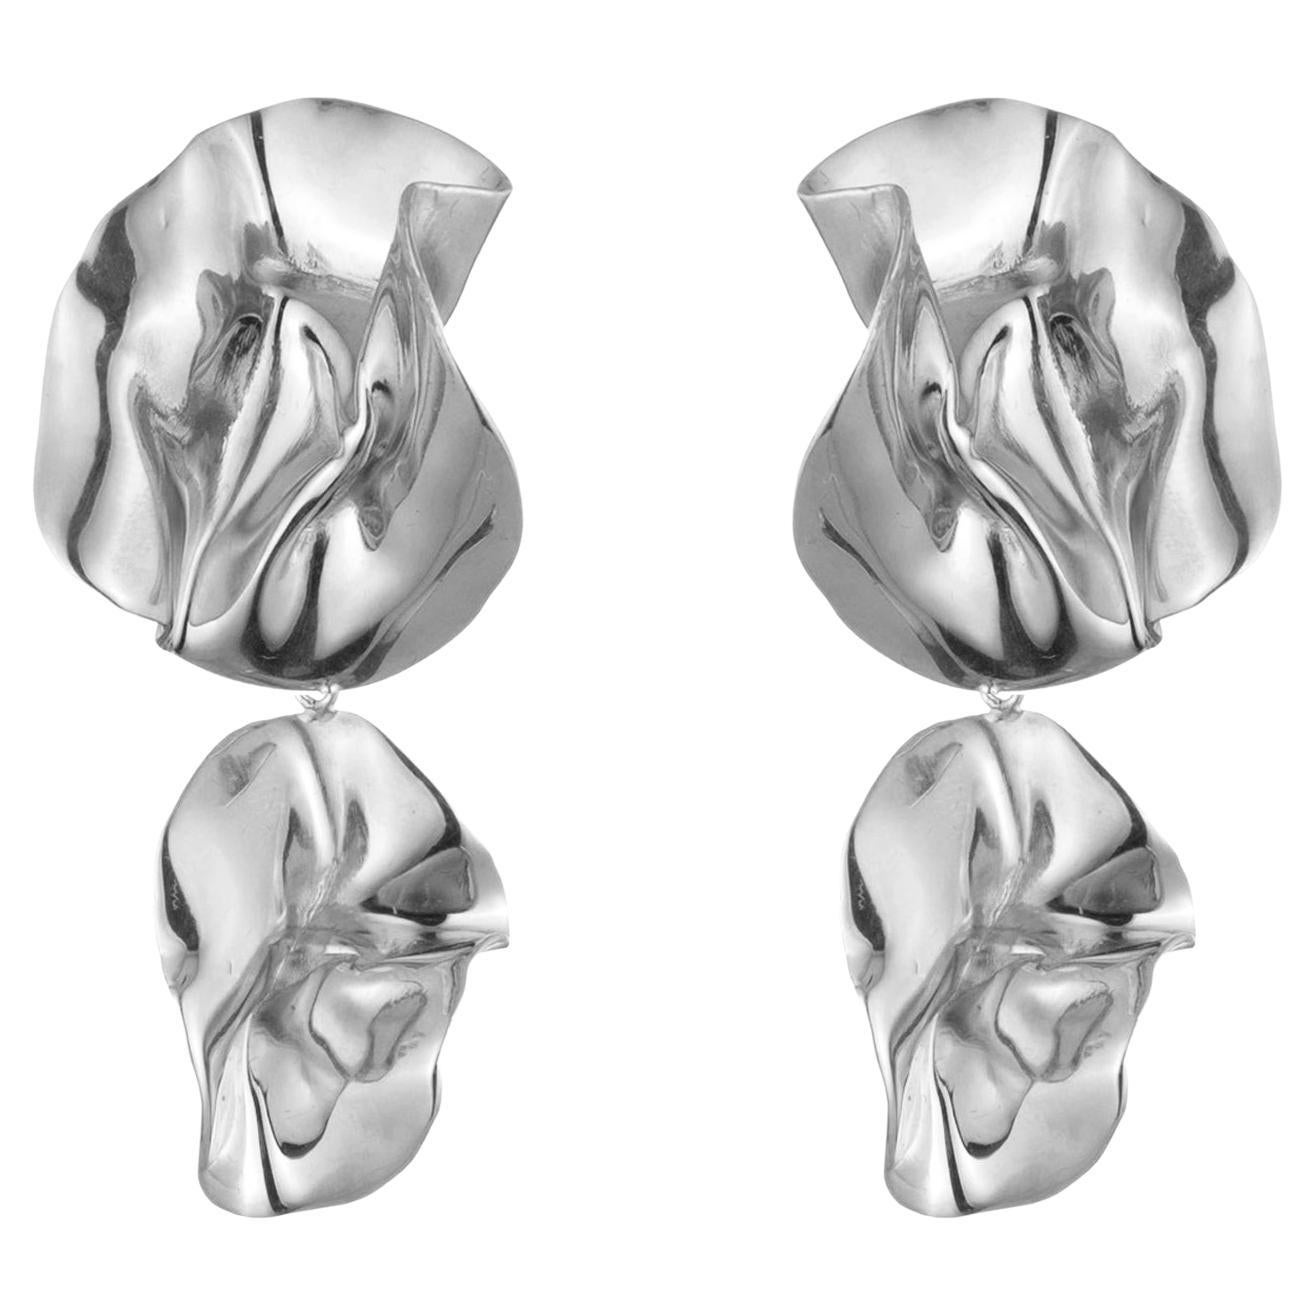 Sterling Silver Sculptural Fold Drop Statement Earrings